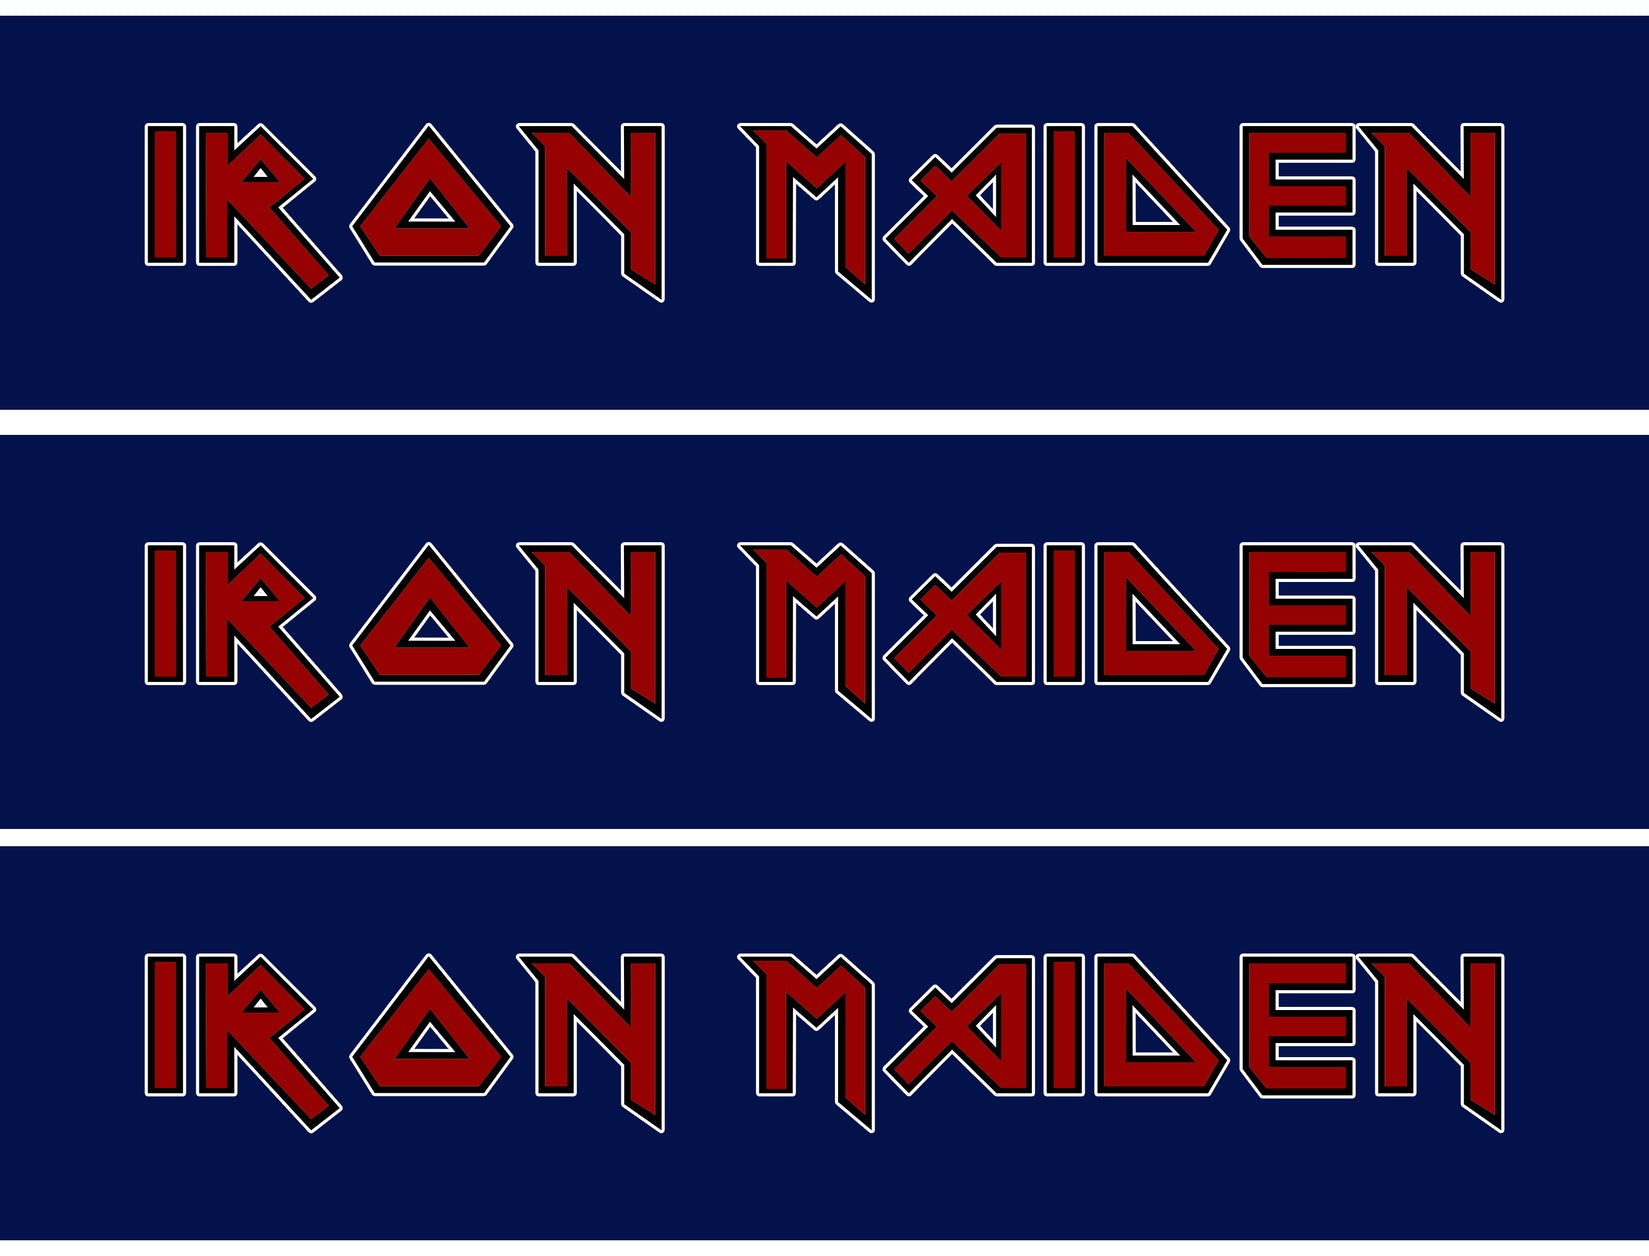 Iron Maiden Strips Metal Music 70s 80s Hardcore London Uk Music Birthday Edible Cake Topper Image Strips ABPID52226